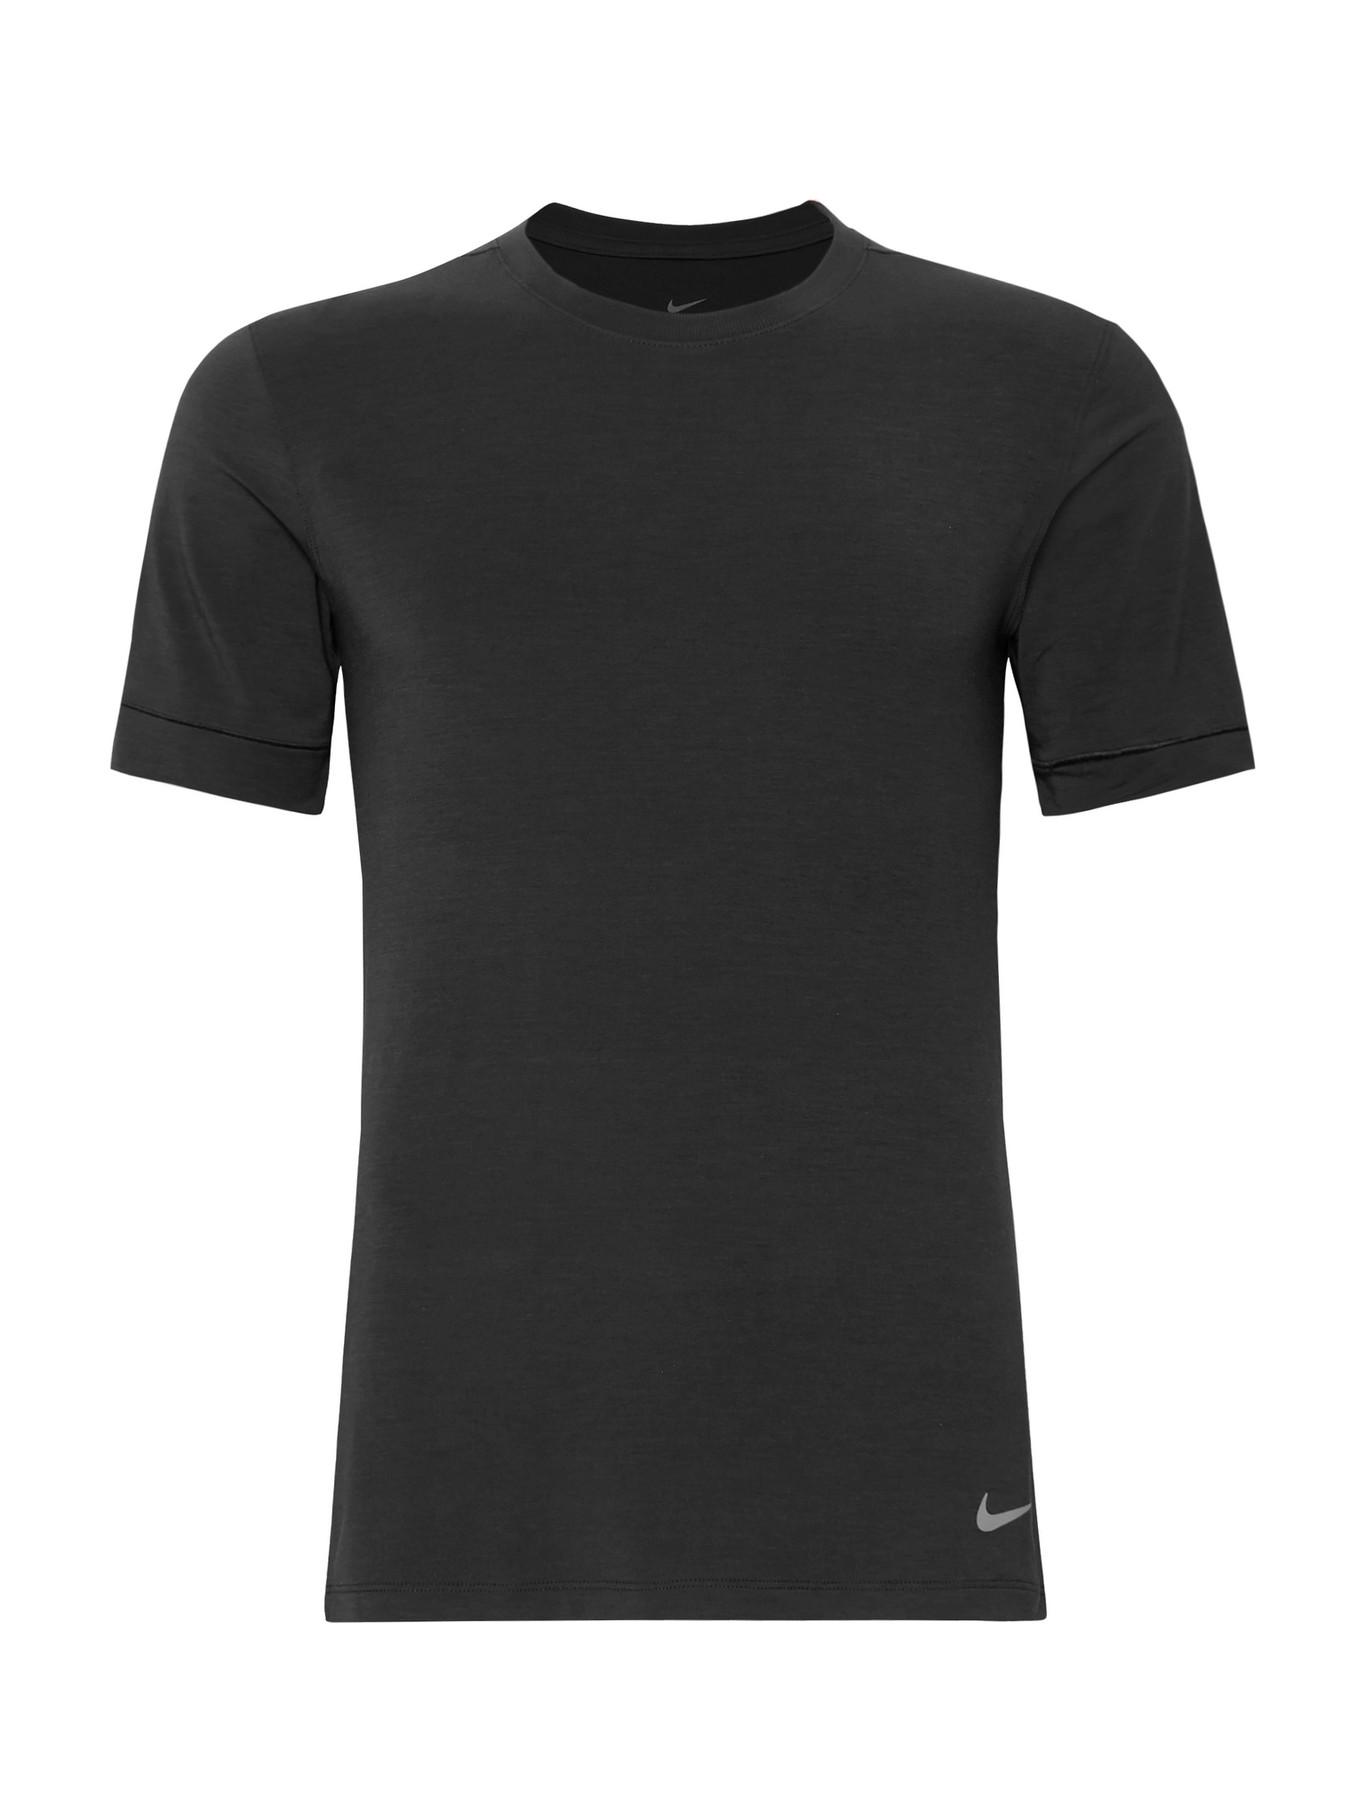 Nike Transcend Slim-fit Dri-fit Yoga T-shirt in Black for Men